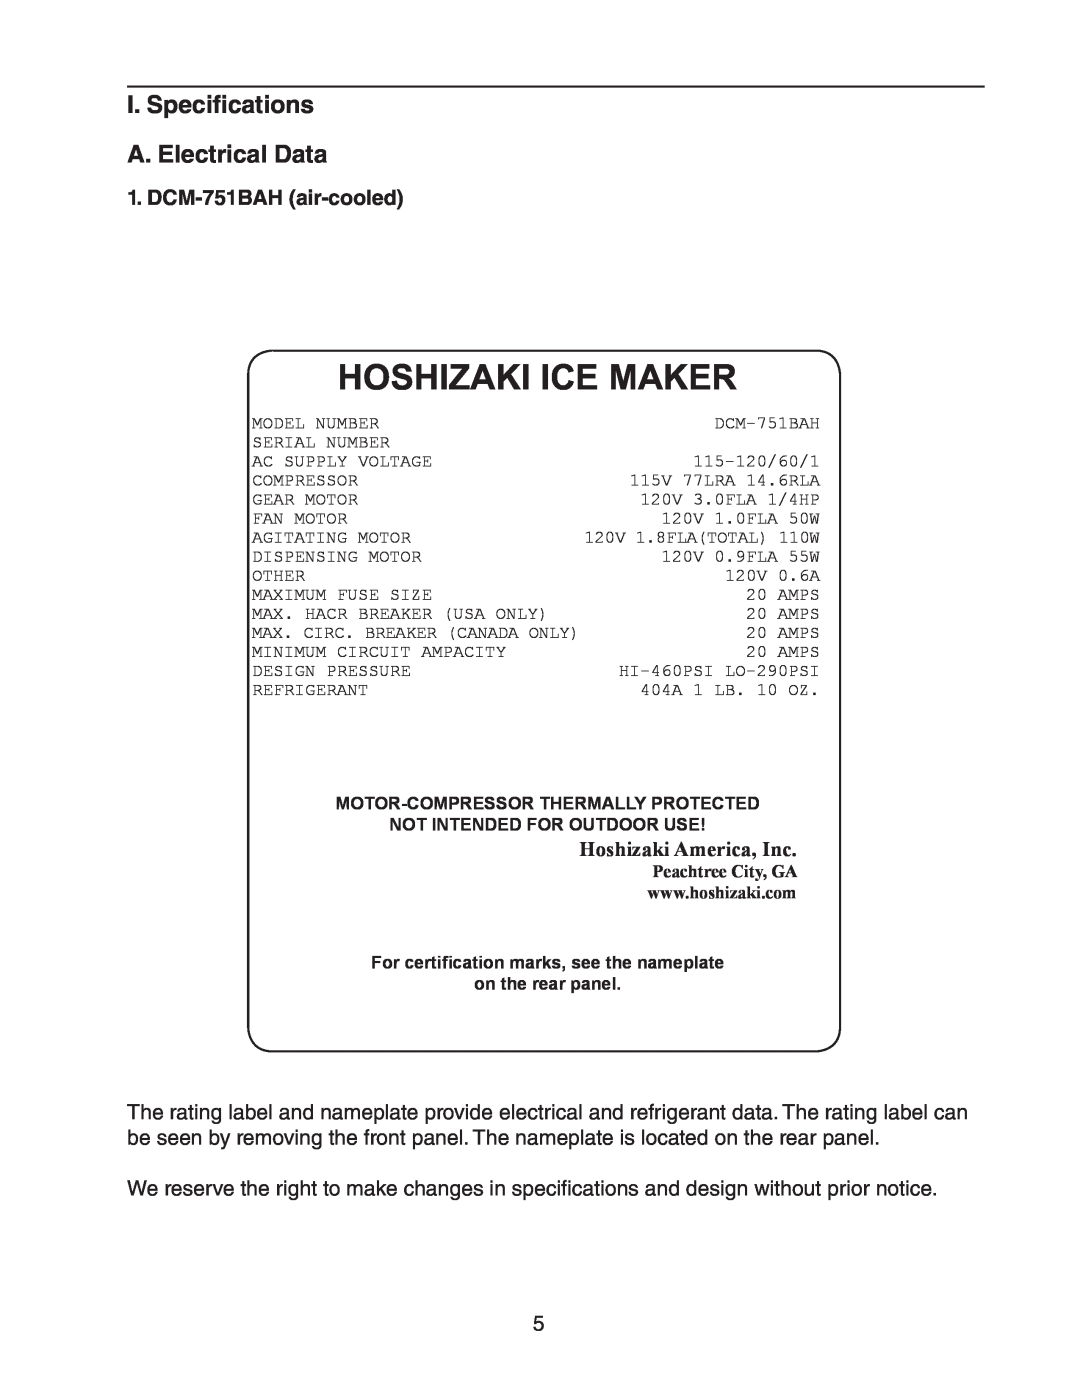 Hoshizaki DCM-751BWH(-OS) Hoshizaki Ice Maker, I. Specifications A. Electrical Data, DCM-751BAH air-cooled 